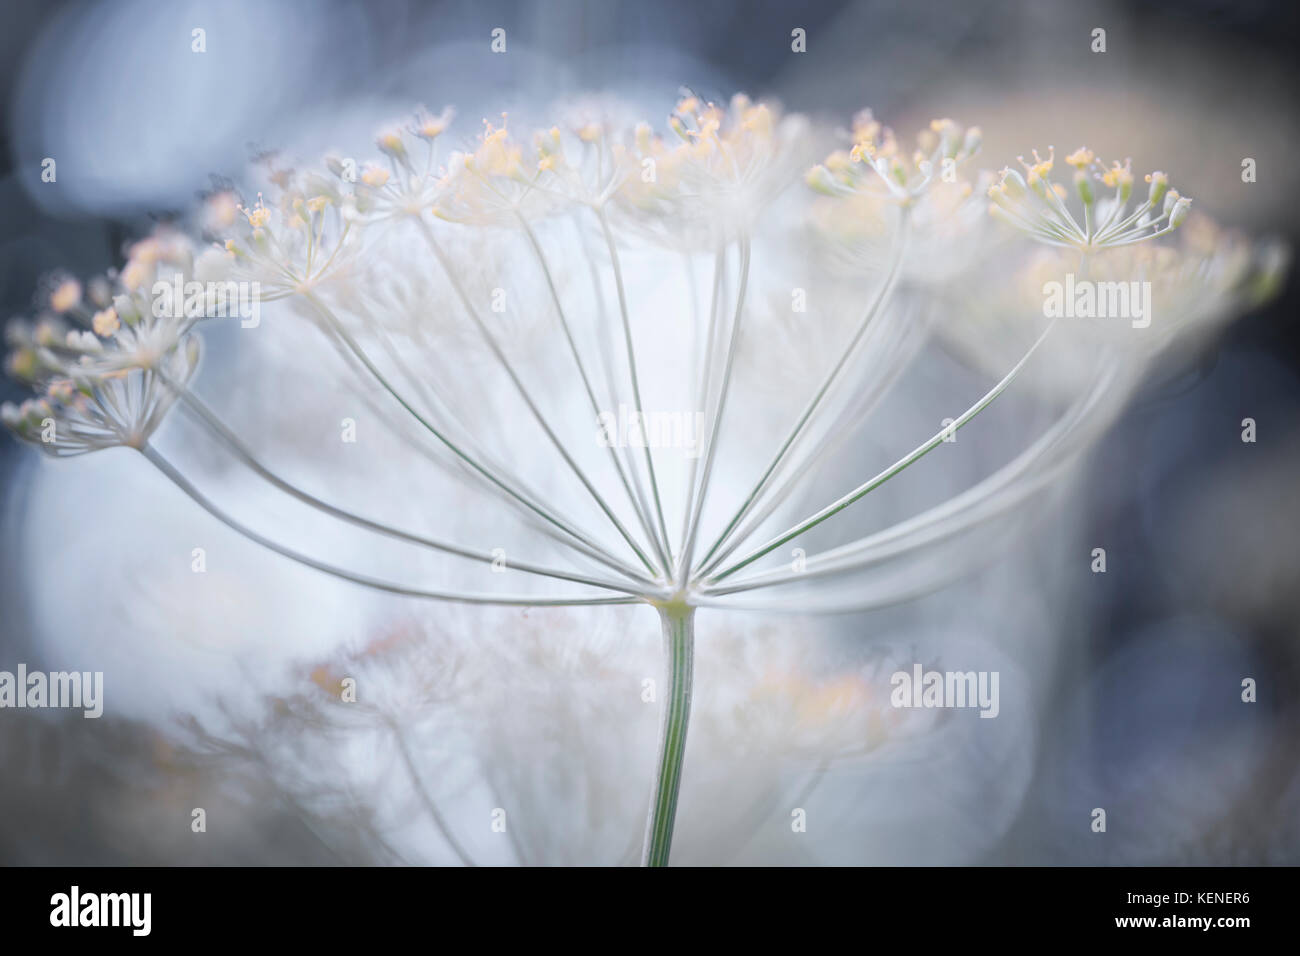 Makro Nahaufnahme der Blüte zarter Dill Kräuter cluster Blumen wachsen im Garten Stockfoto